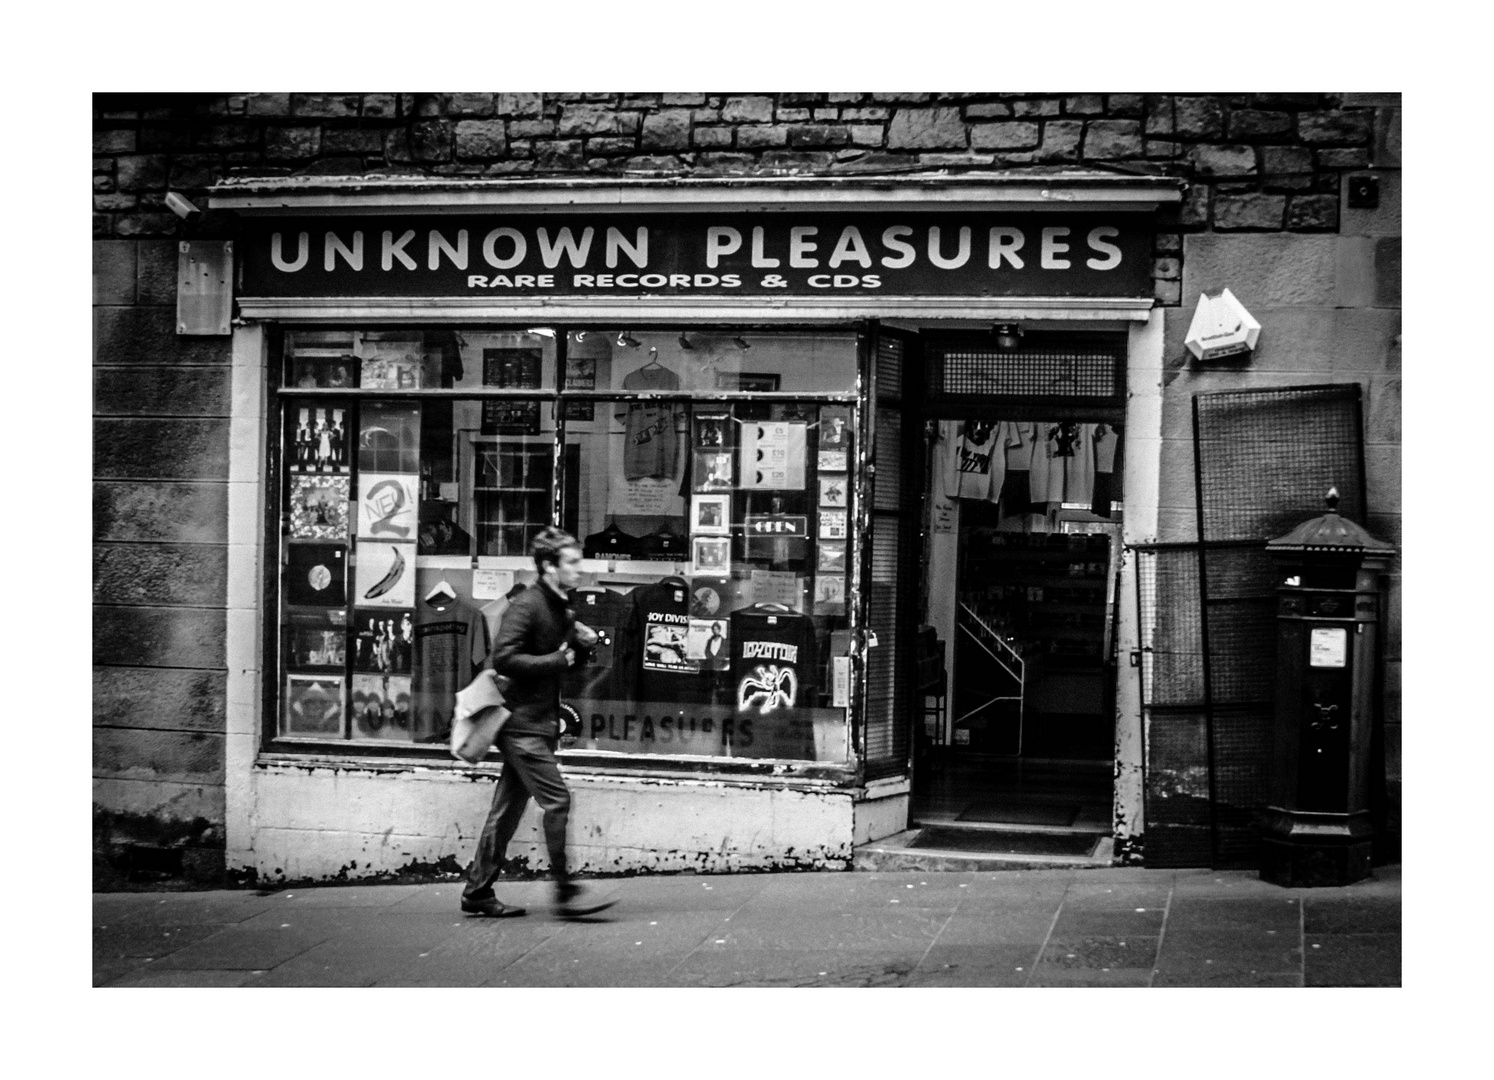 Unknown pleasures